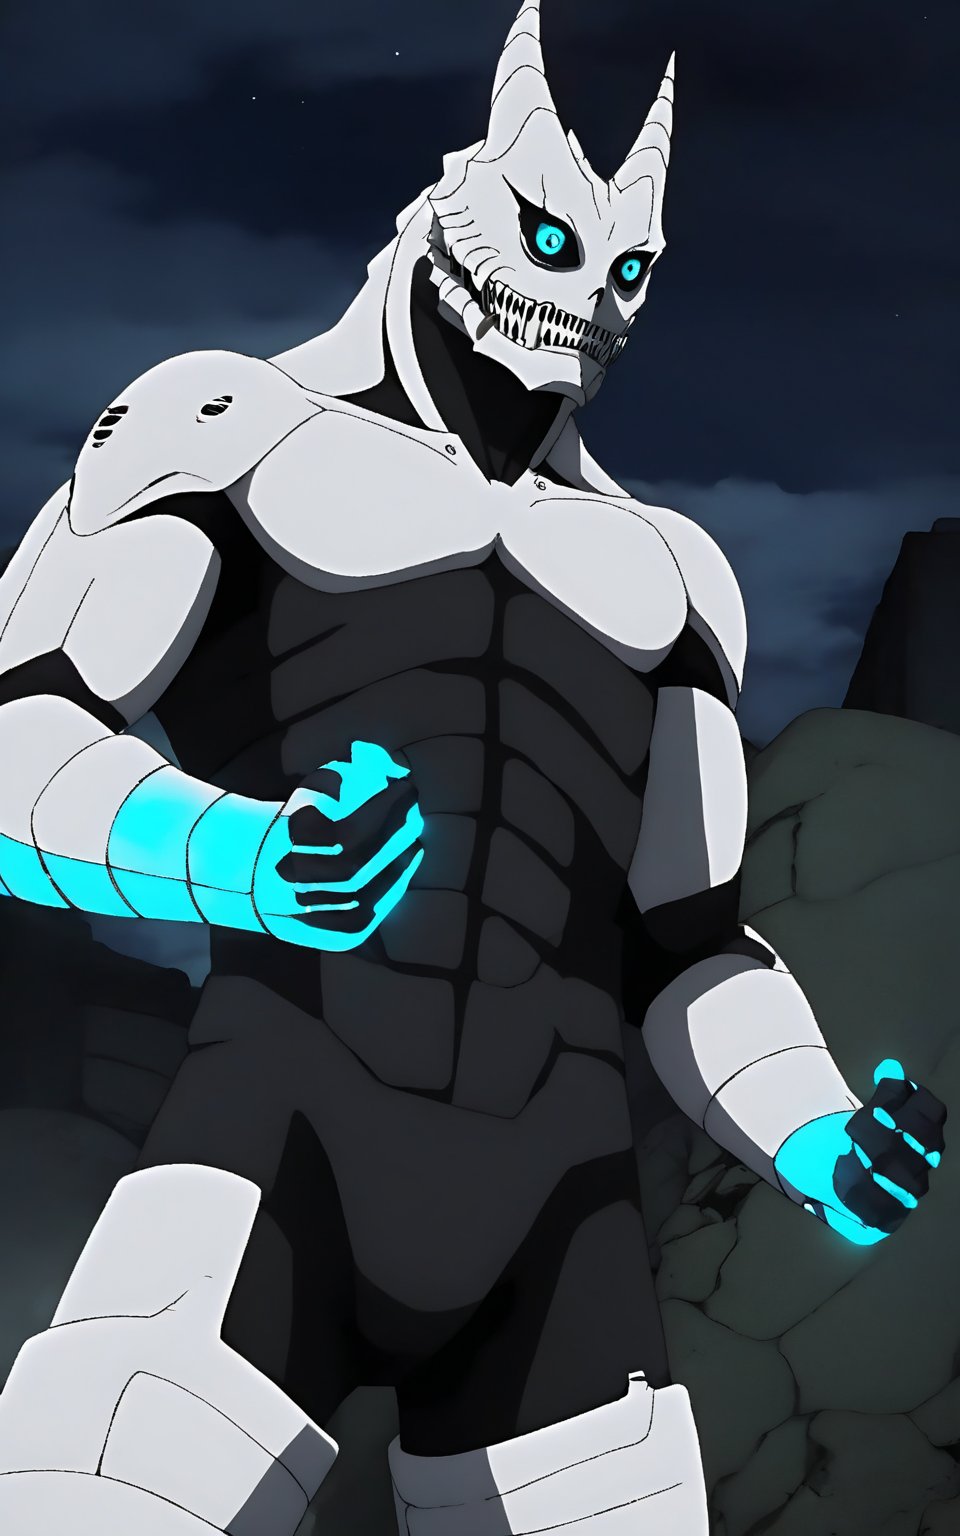 Kaiju No. 8, kafka hibino kaiju form, white armor bodysuit with glowing blue lights on his arms and legs